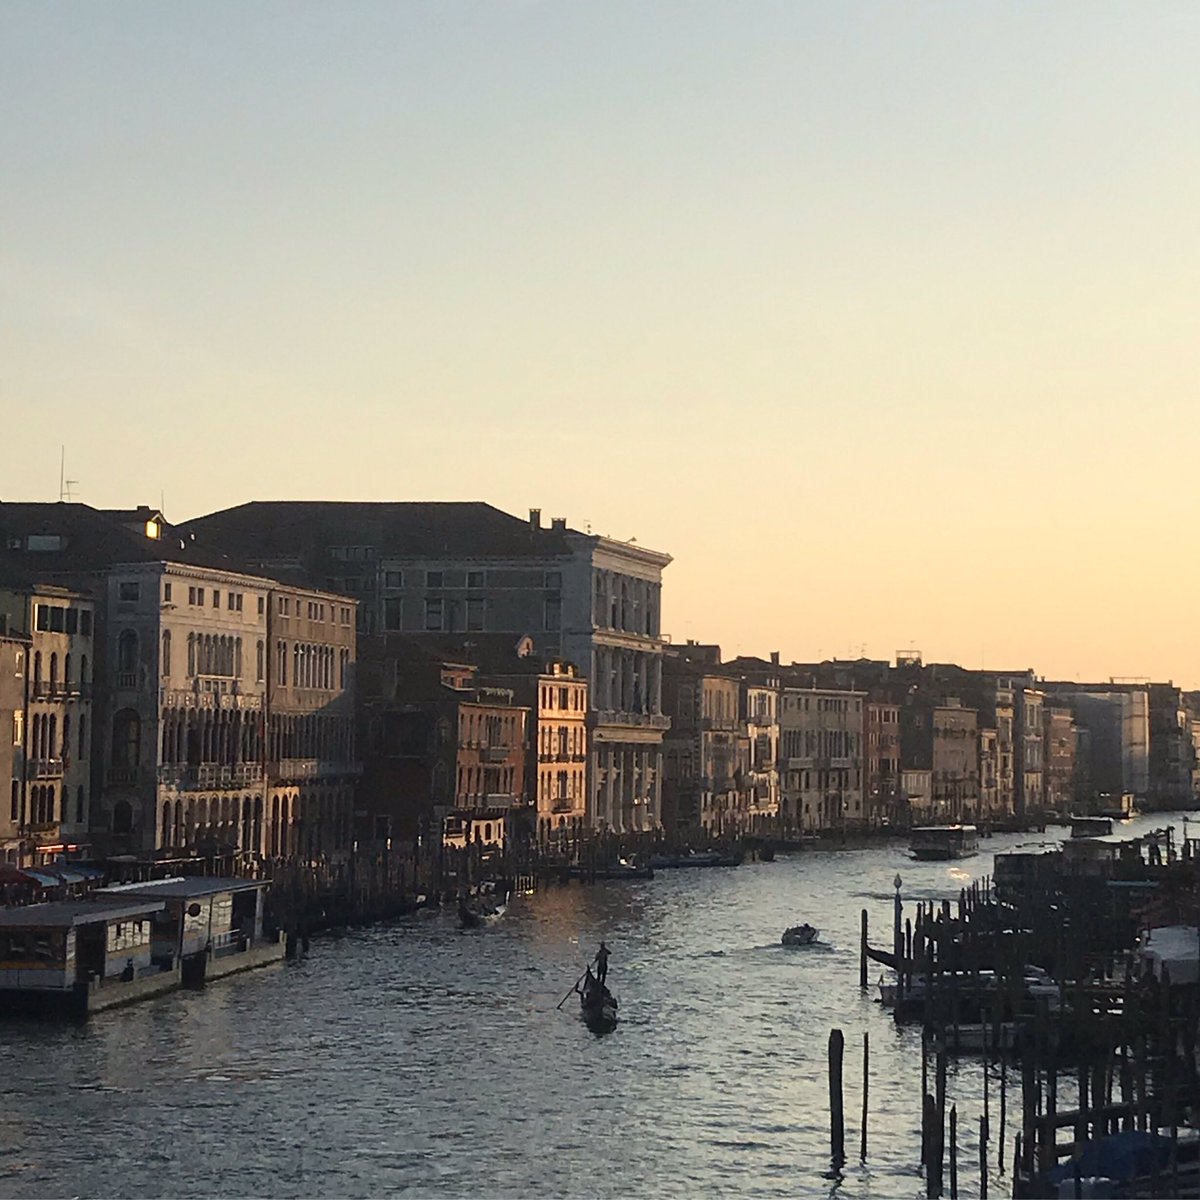 @ #Venise #Venice #CanalGrande #Rialto
#Sunset #NoFilter